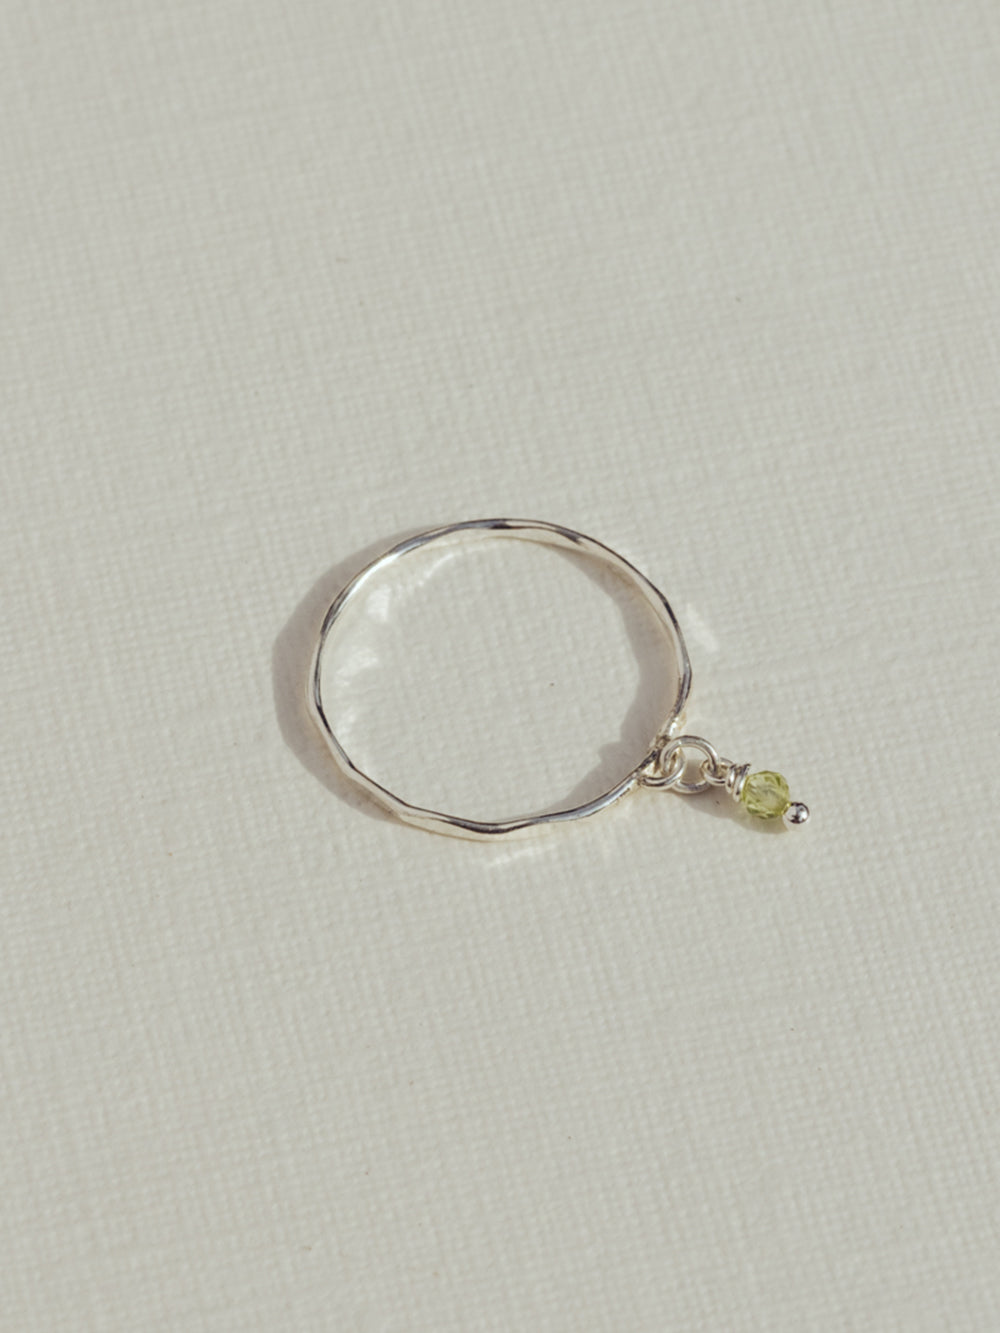 Birthstone ring August - Peridot | 925 Sterling Silver